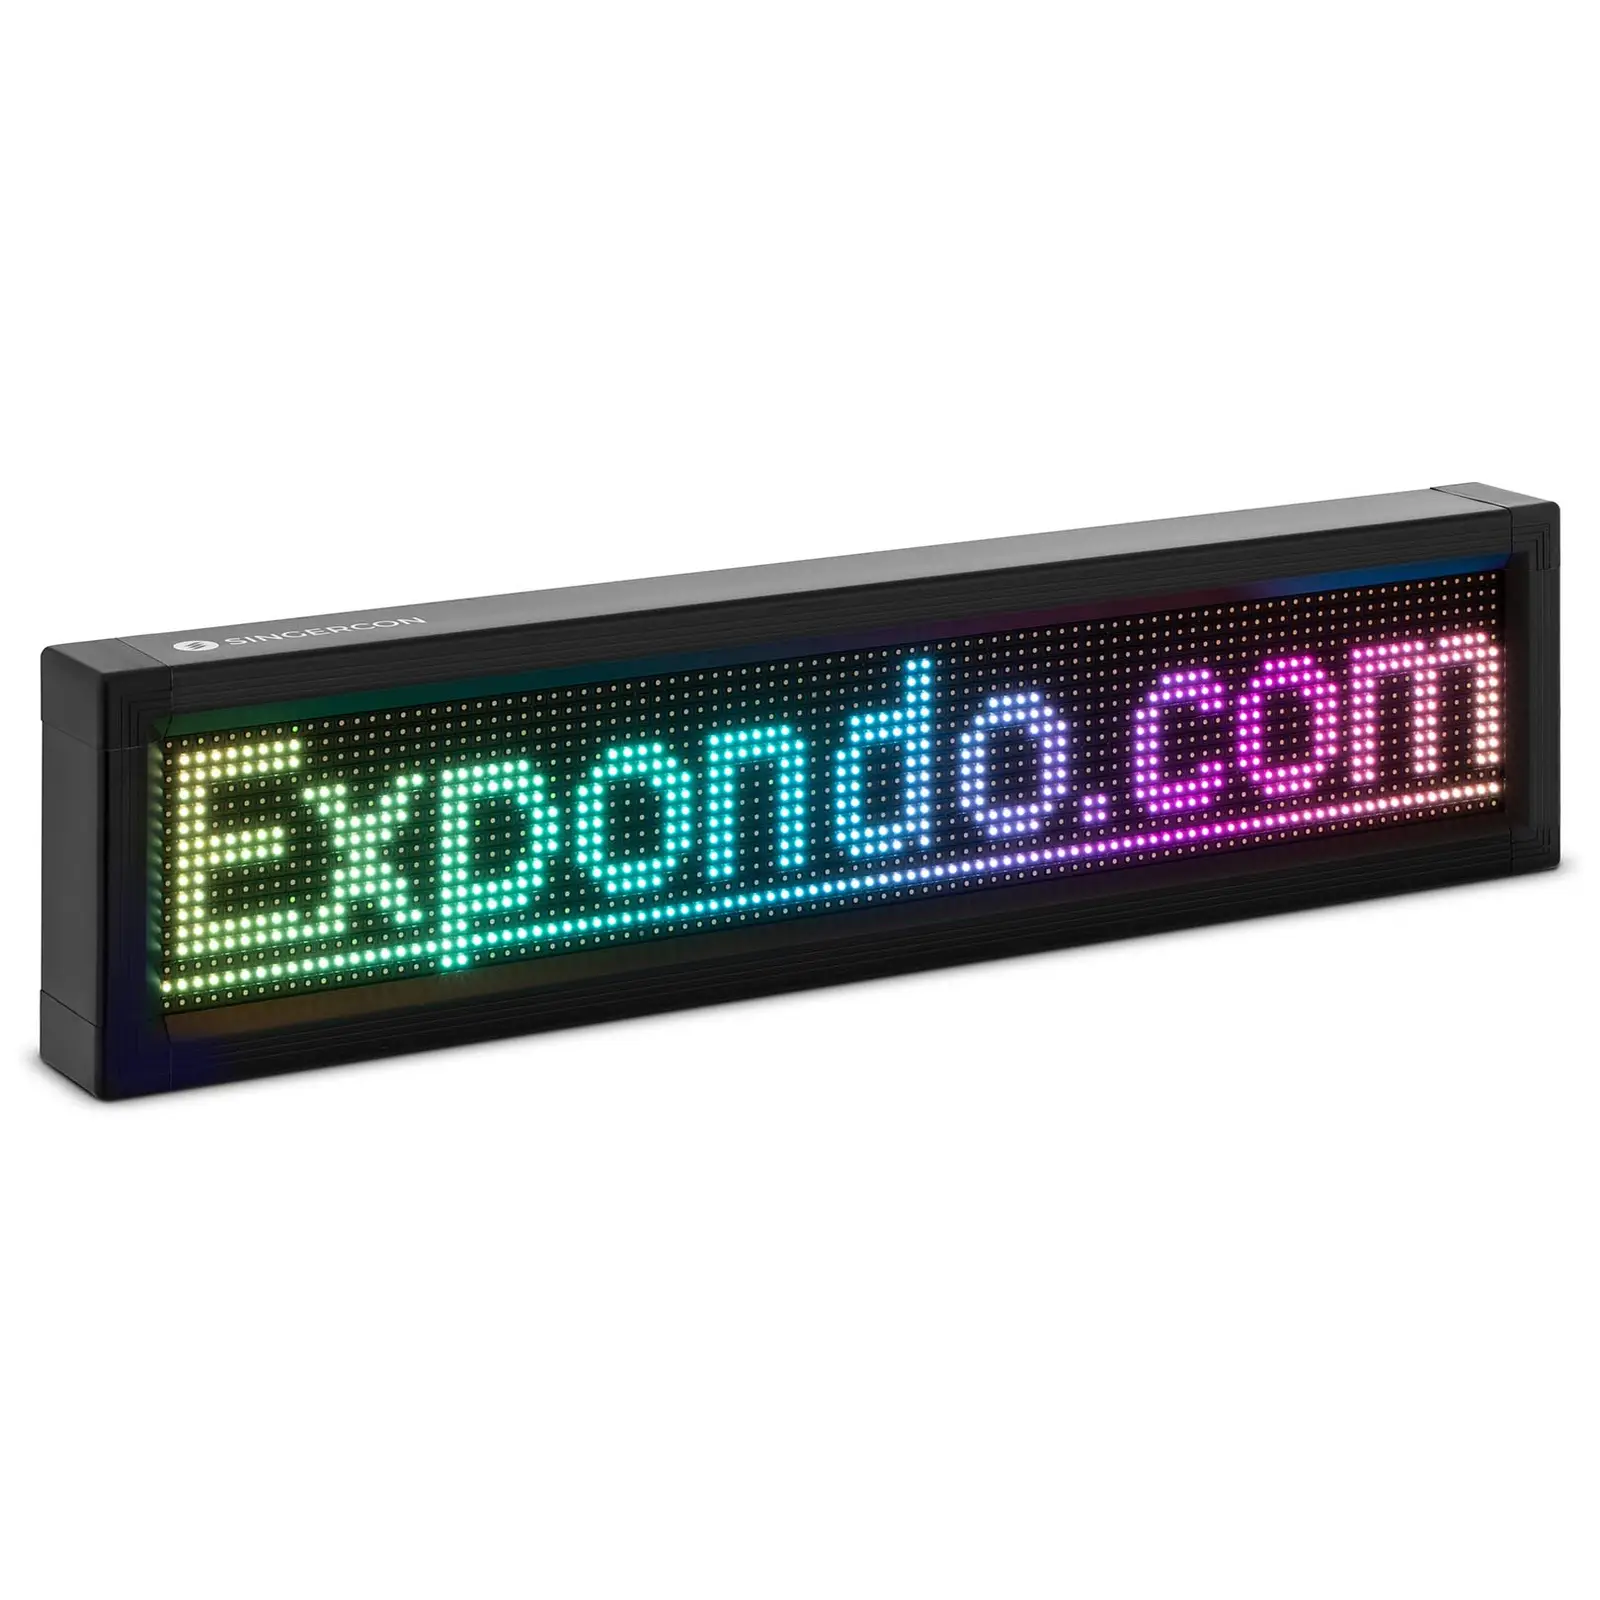 Scritta LED - 96 x 16 LED colorati - 67 x 19 cm - Programmabile tramite iOS / Android